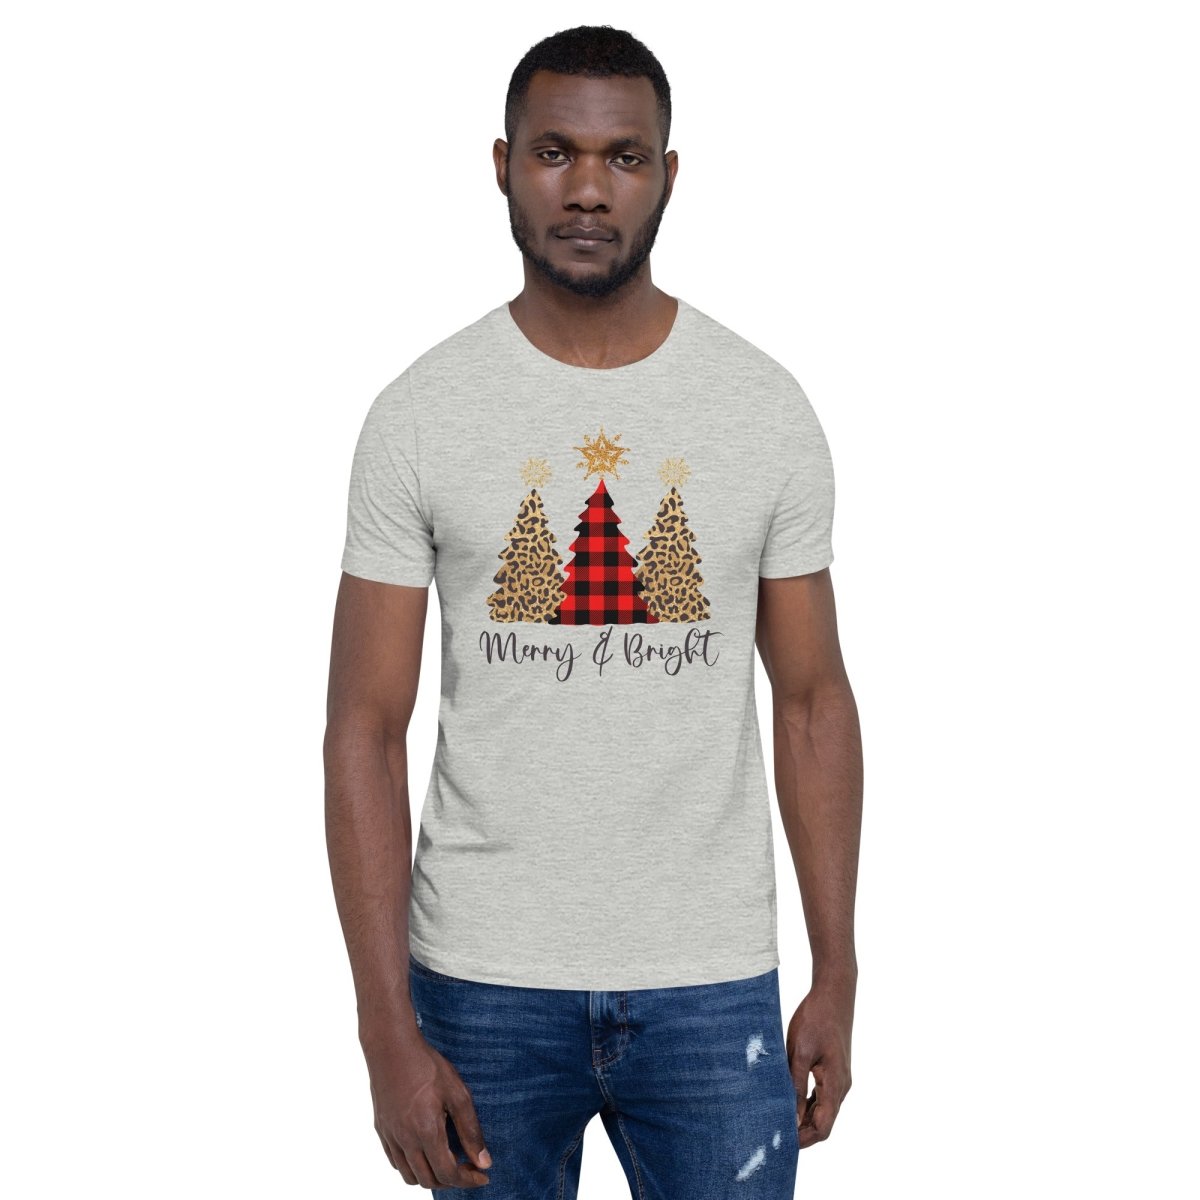 Merry & Bright Plaid Trees T-Shirt - DoggyLoveandMore